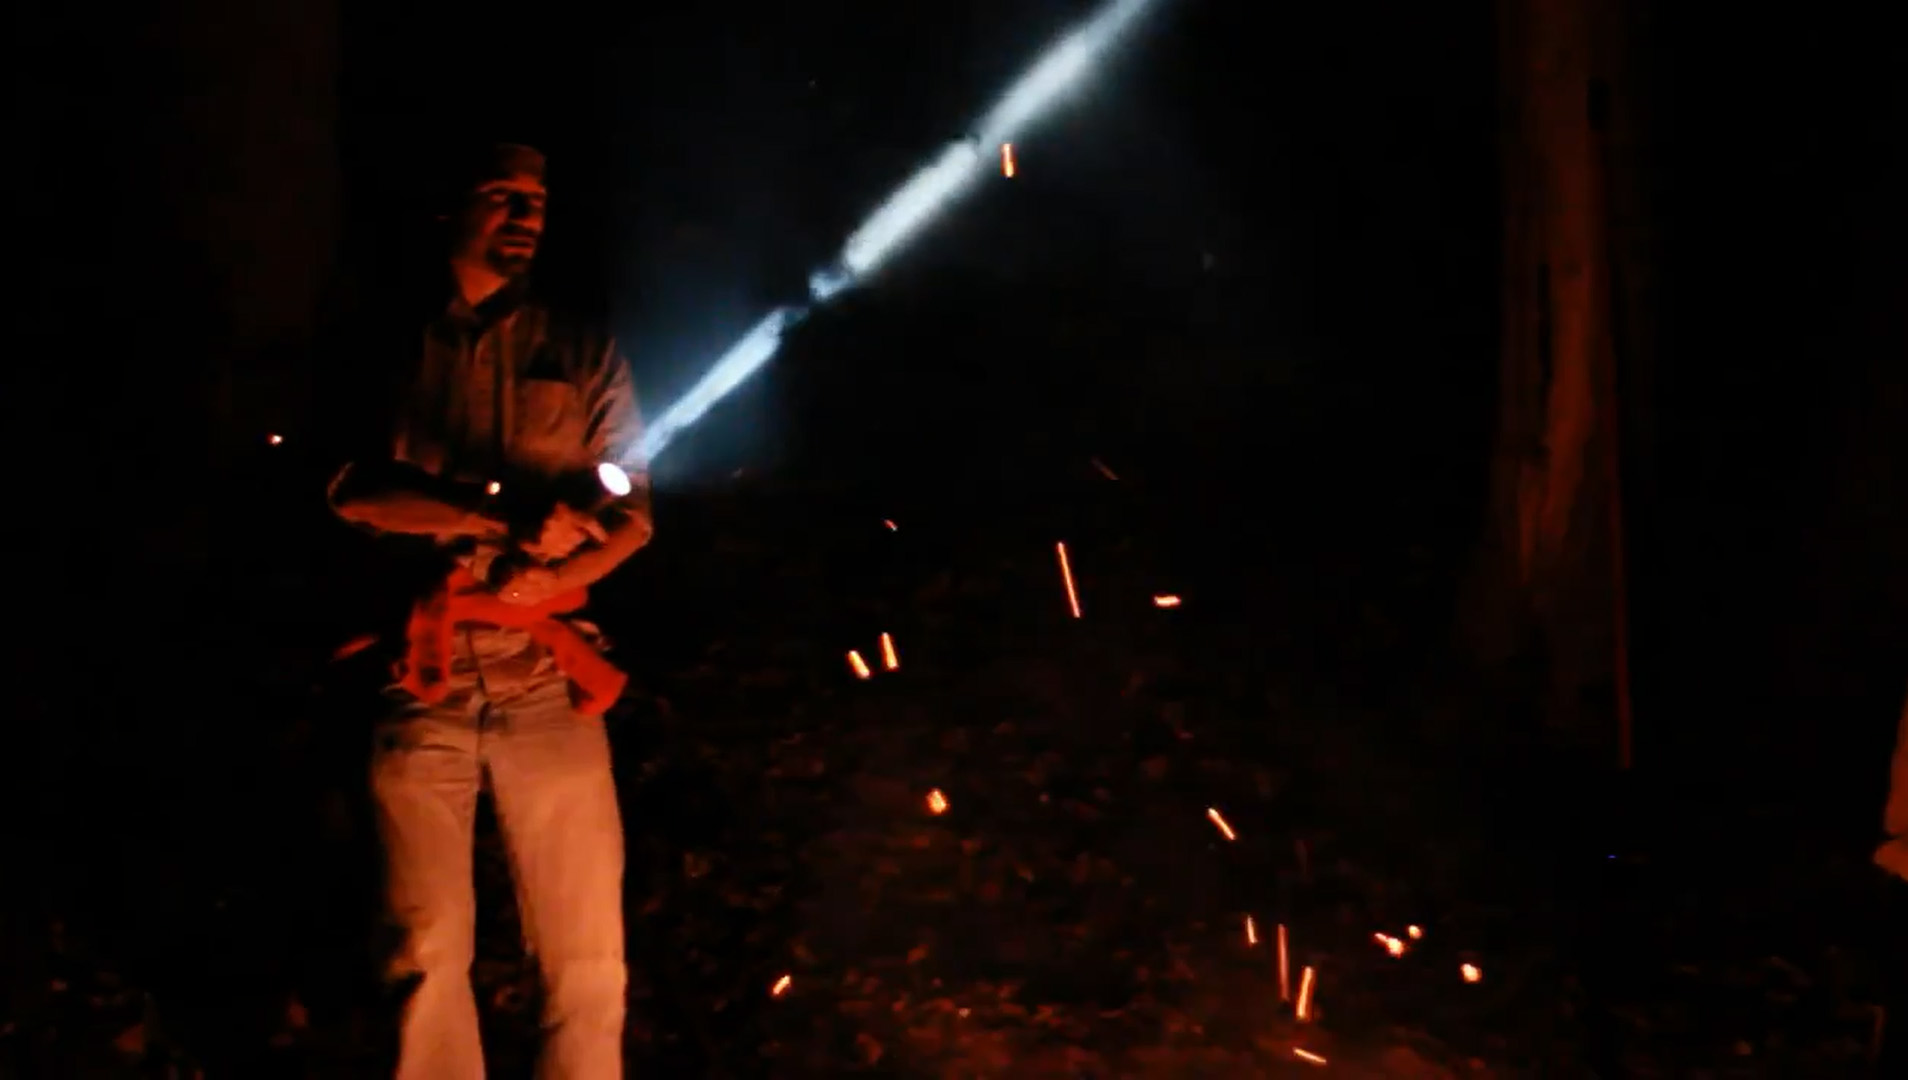 Mike Campfire Lightsaber 2